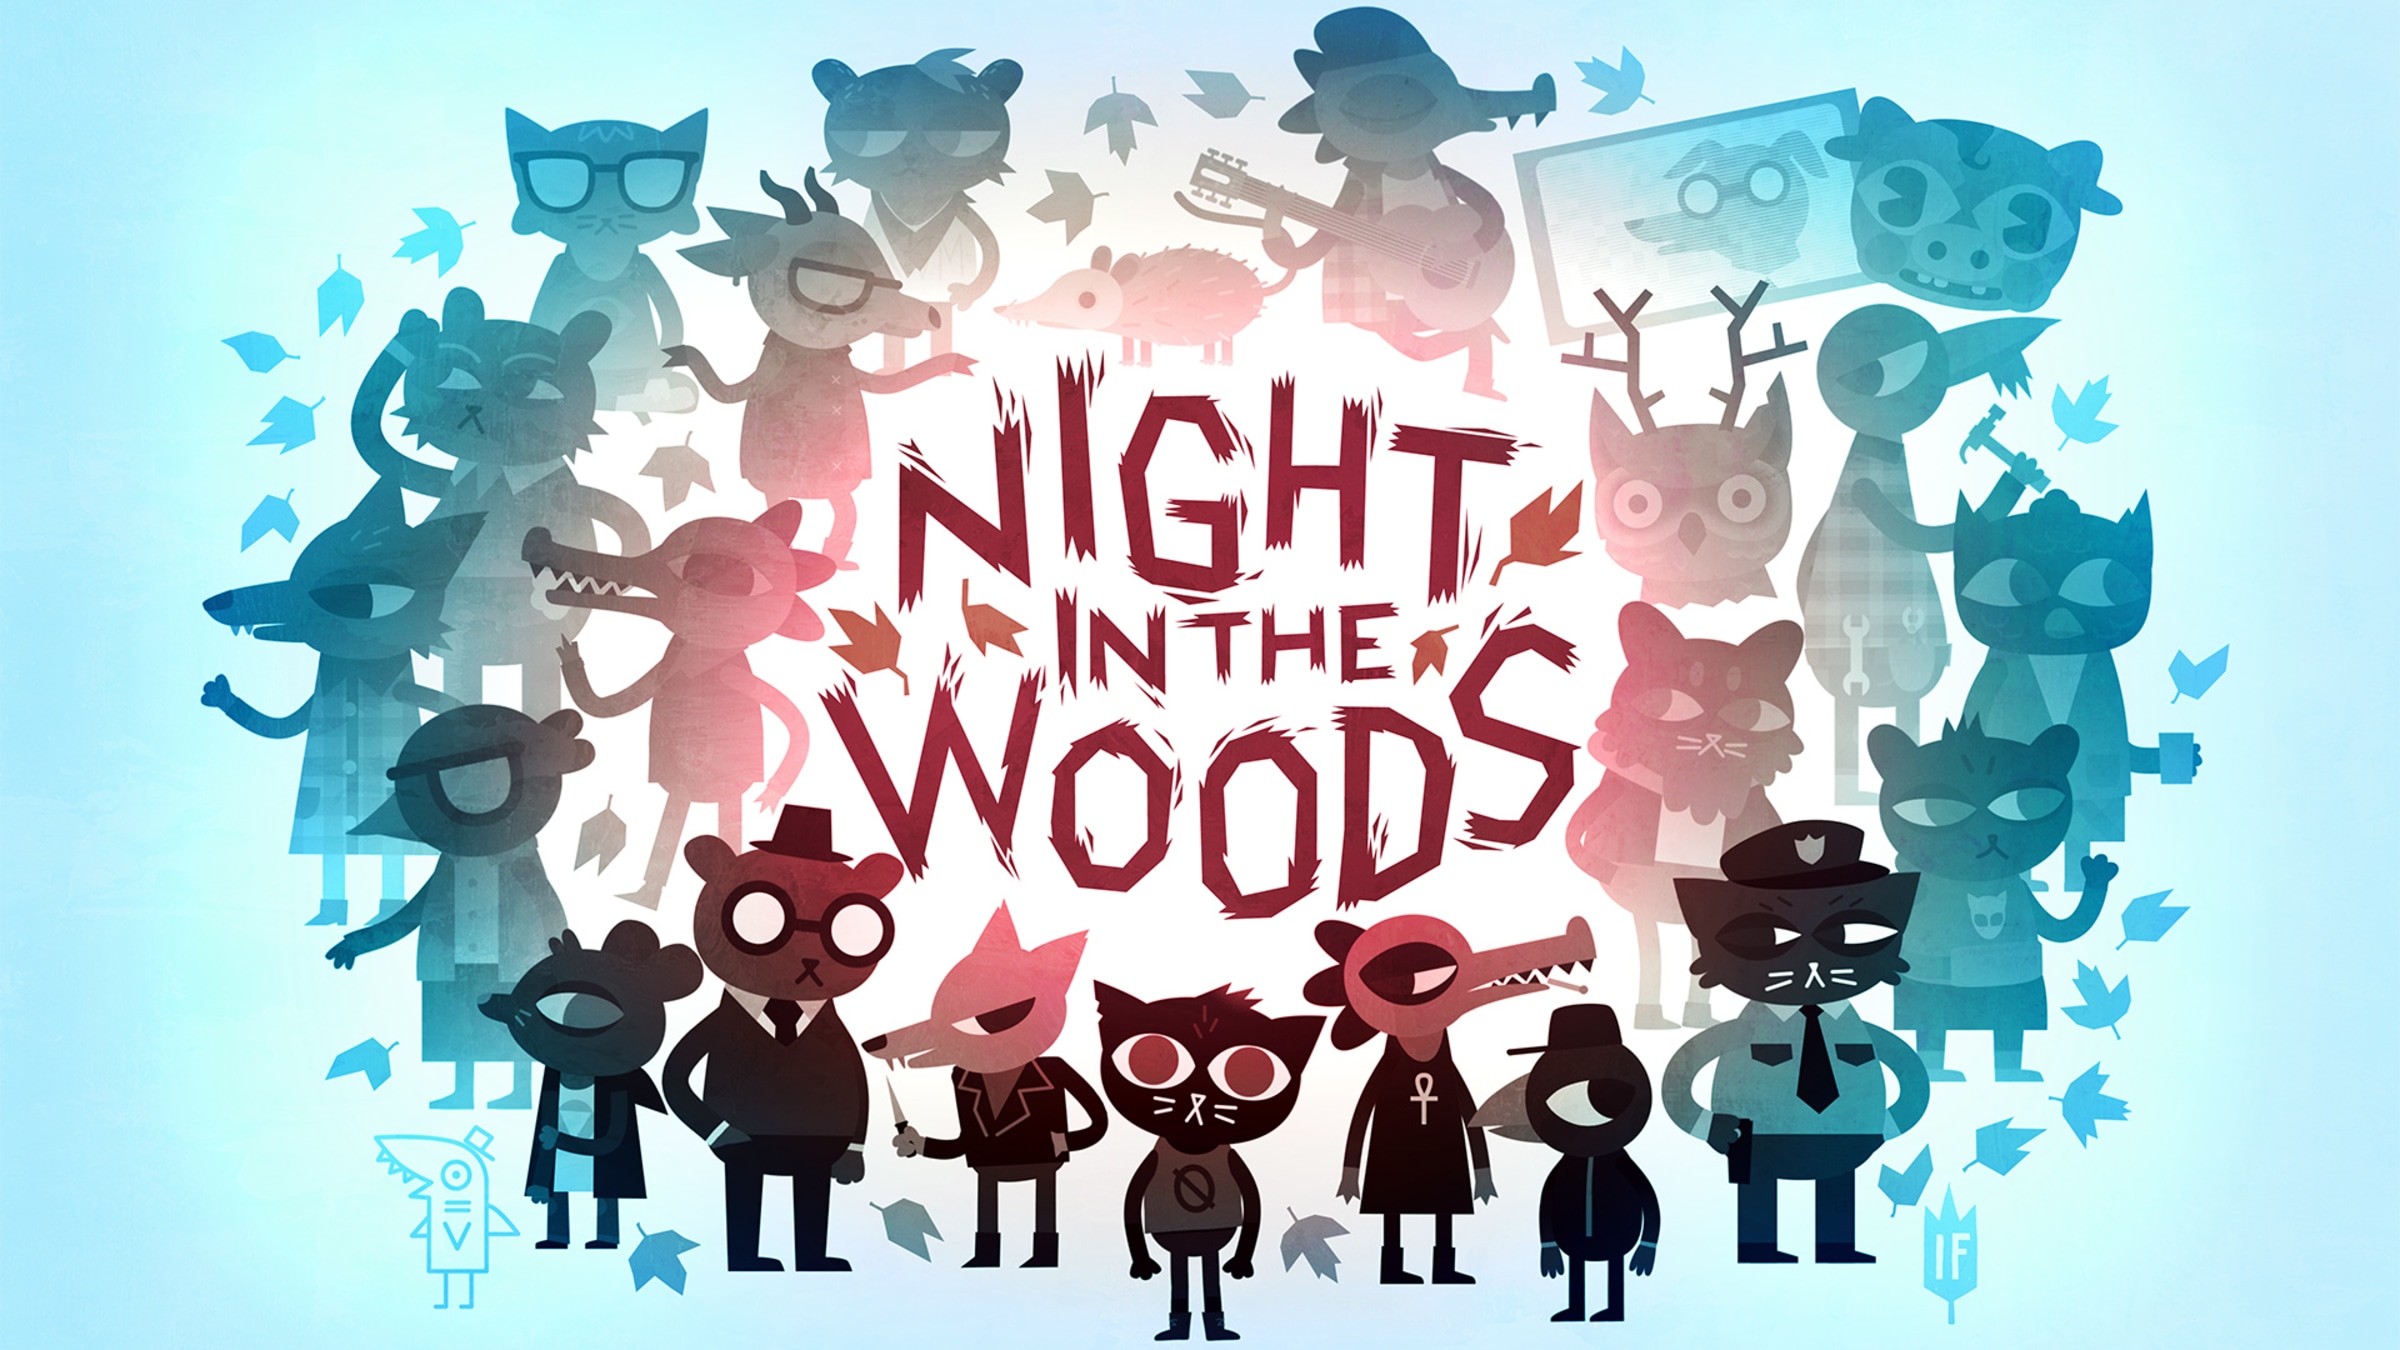 Night In The Woods (@NightInTheWoods) / X